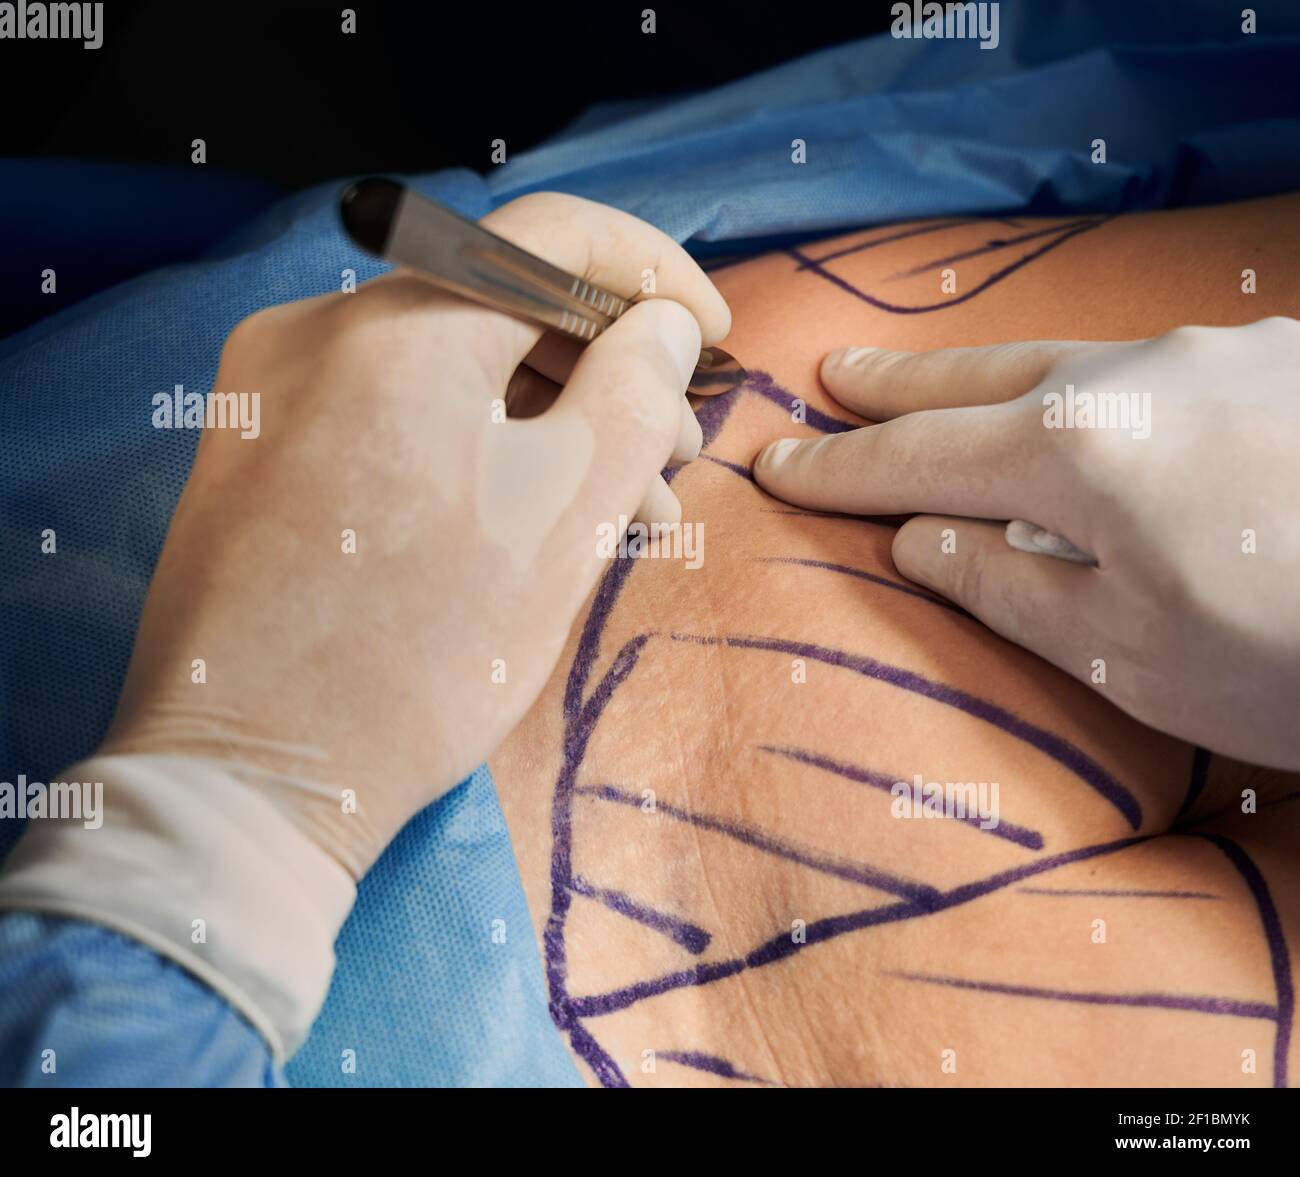 IPl or Intense Pulsed Light - Art of Plastic Surgery Fairfield CT